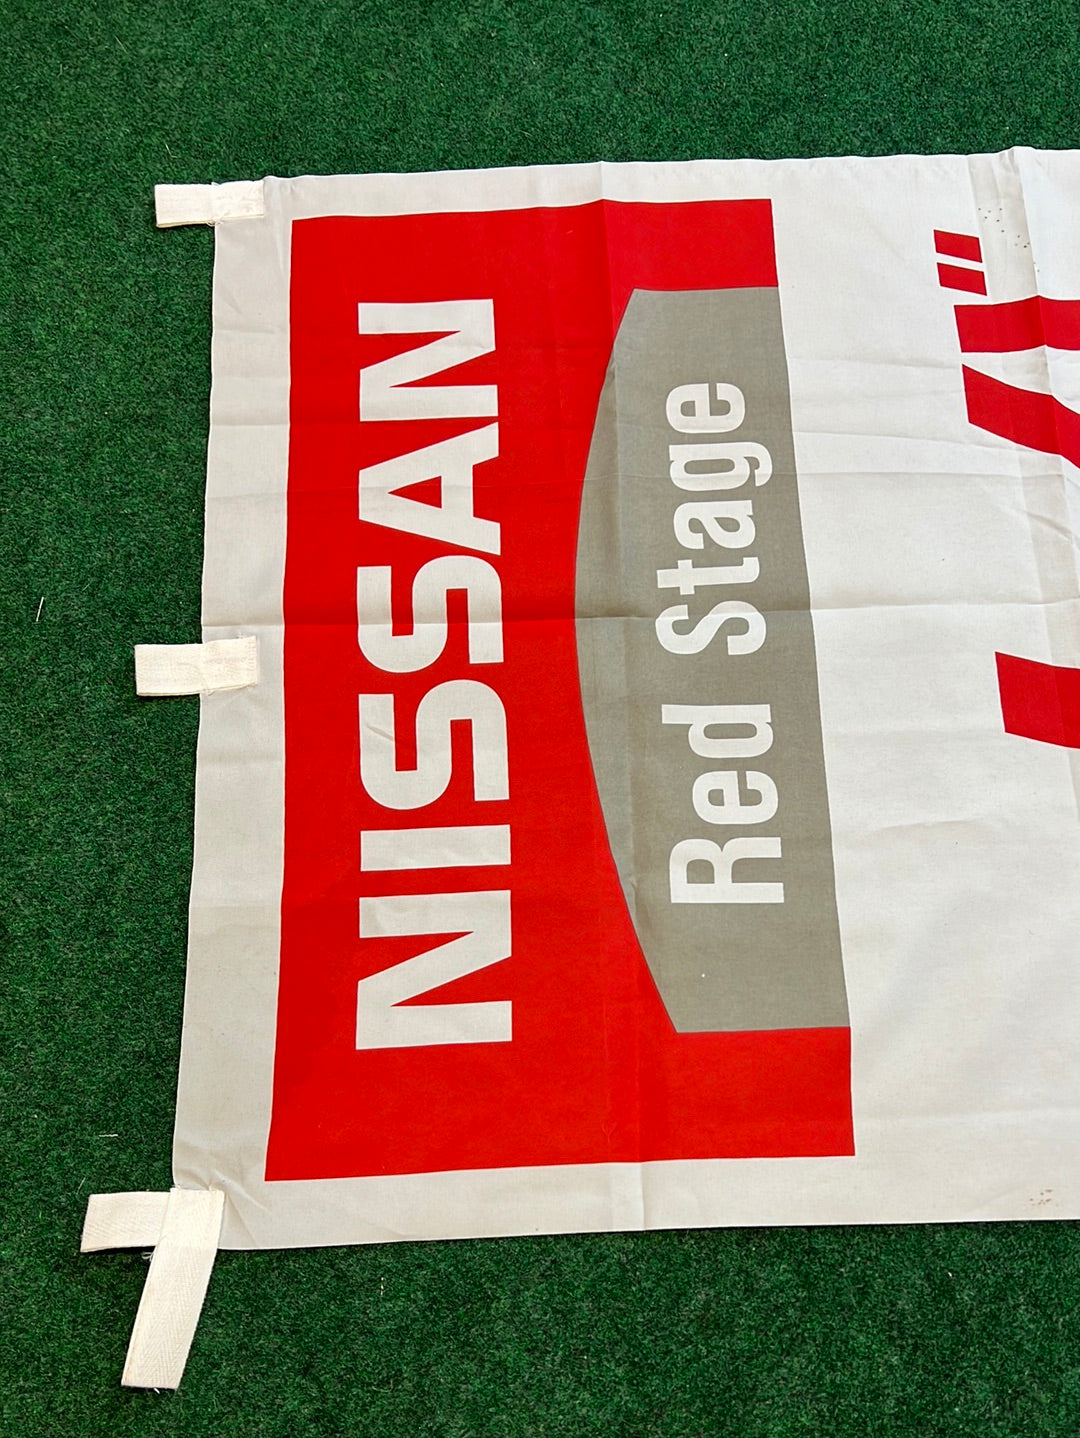 Nissan Red Stage - (1) Bassara J Splend Van Nissan Dealer Nobori Banner